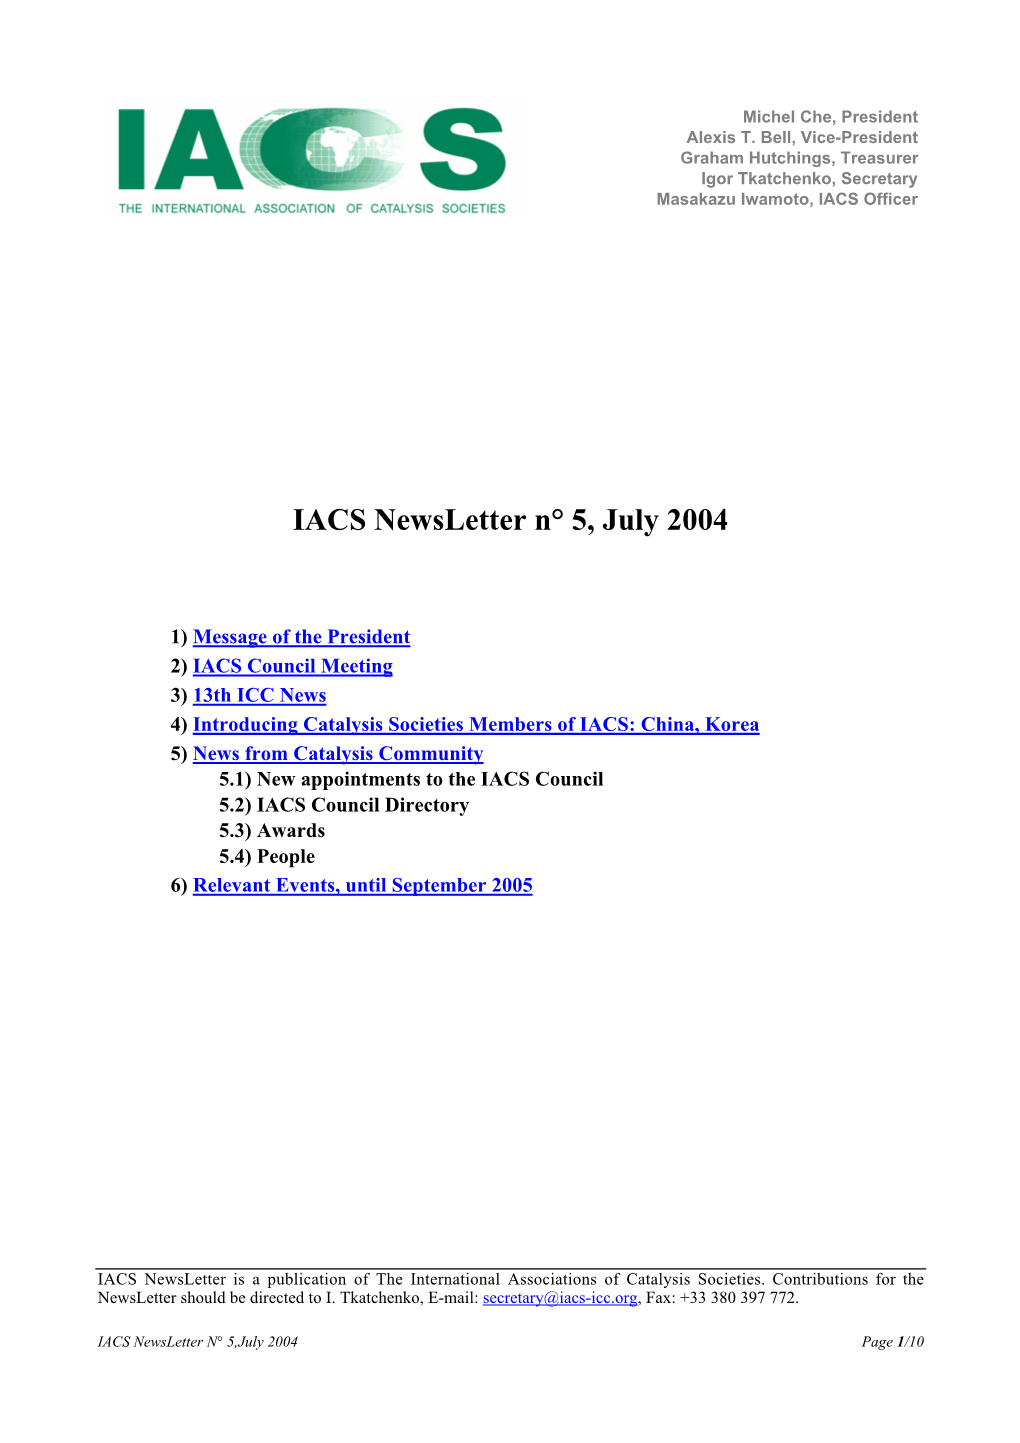 IACS Newsletter N° 5, July 2004